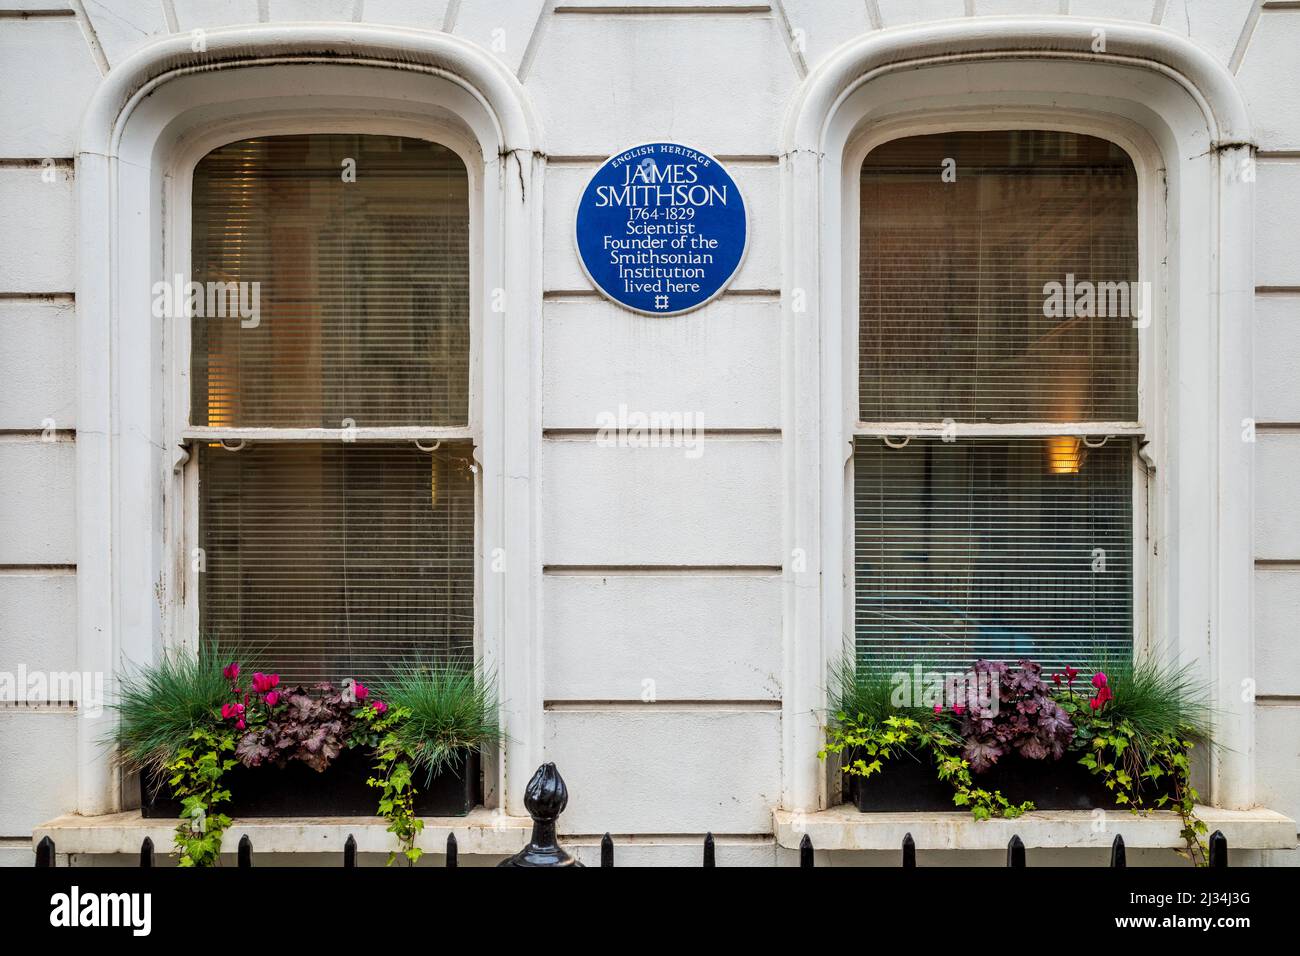 James Smithson Blue Plaque Londra - JAMES SMITHSON 1764-1829 lo scienziato fondatore della Smithsonian Institution visse qui. 9 Bentinck St Marylebone. Foto Stock